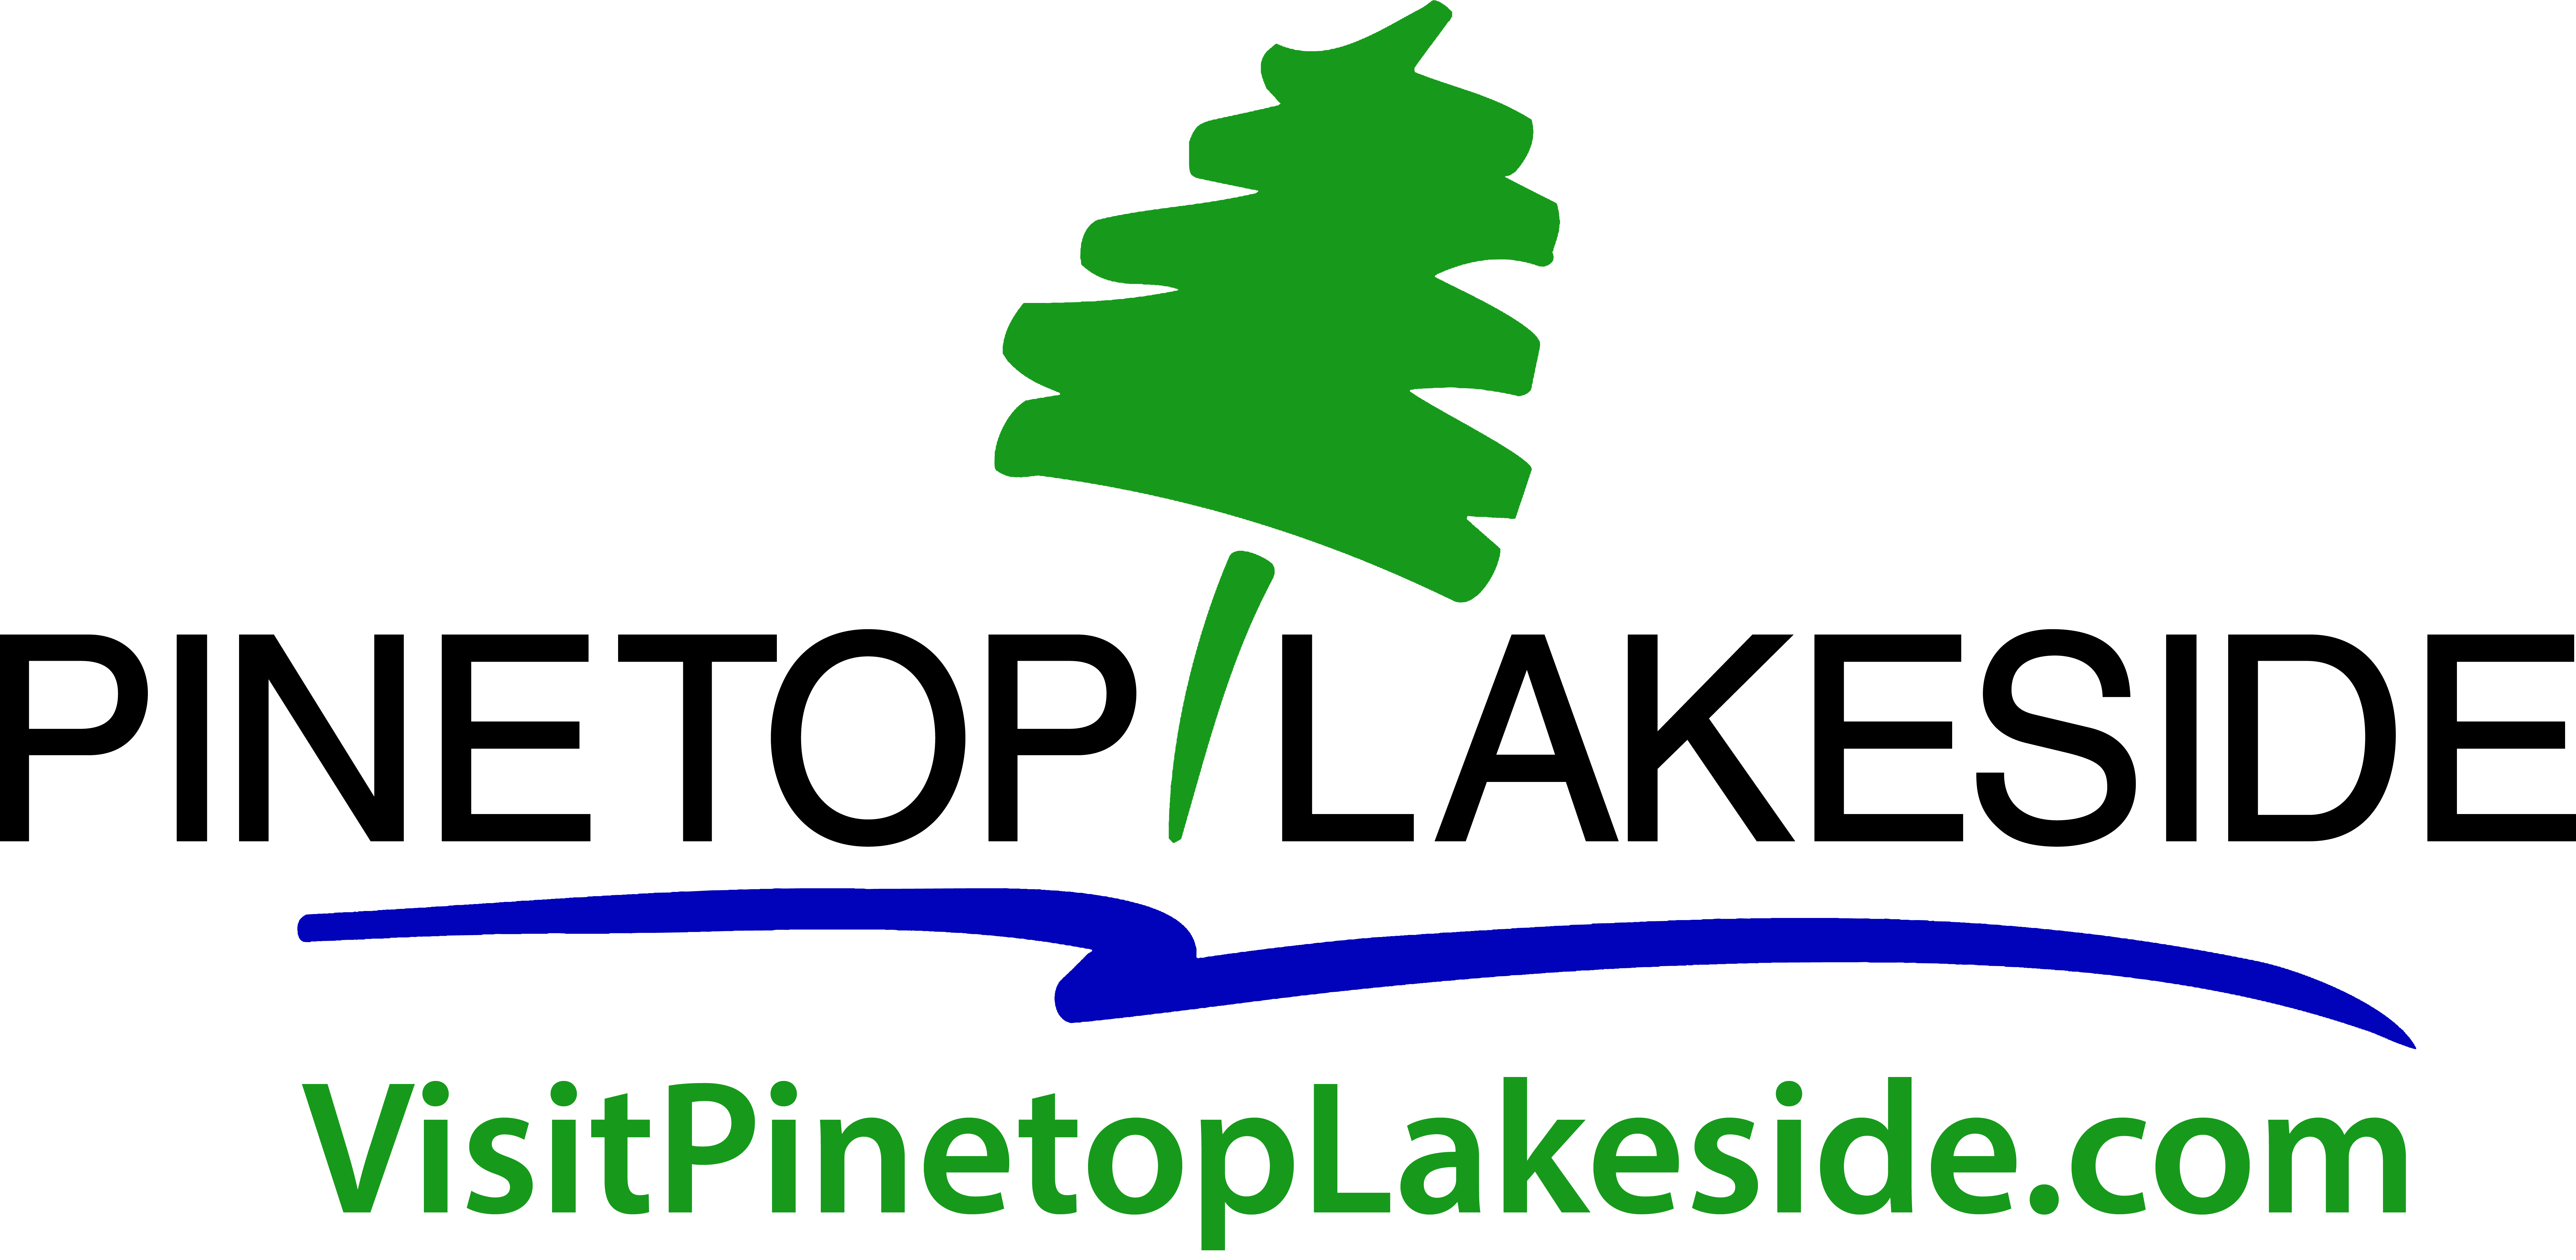 Town of Pinetop-Lakeside